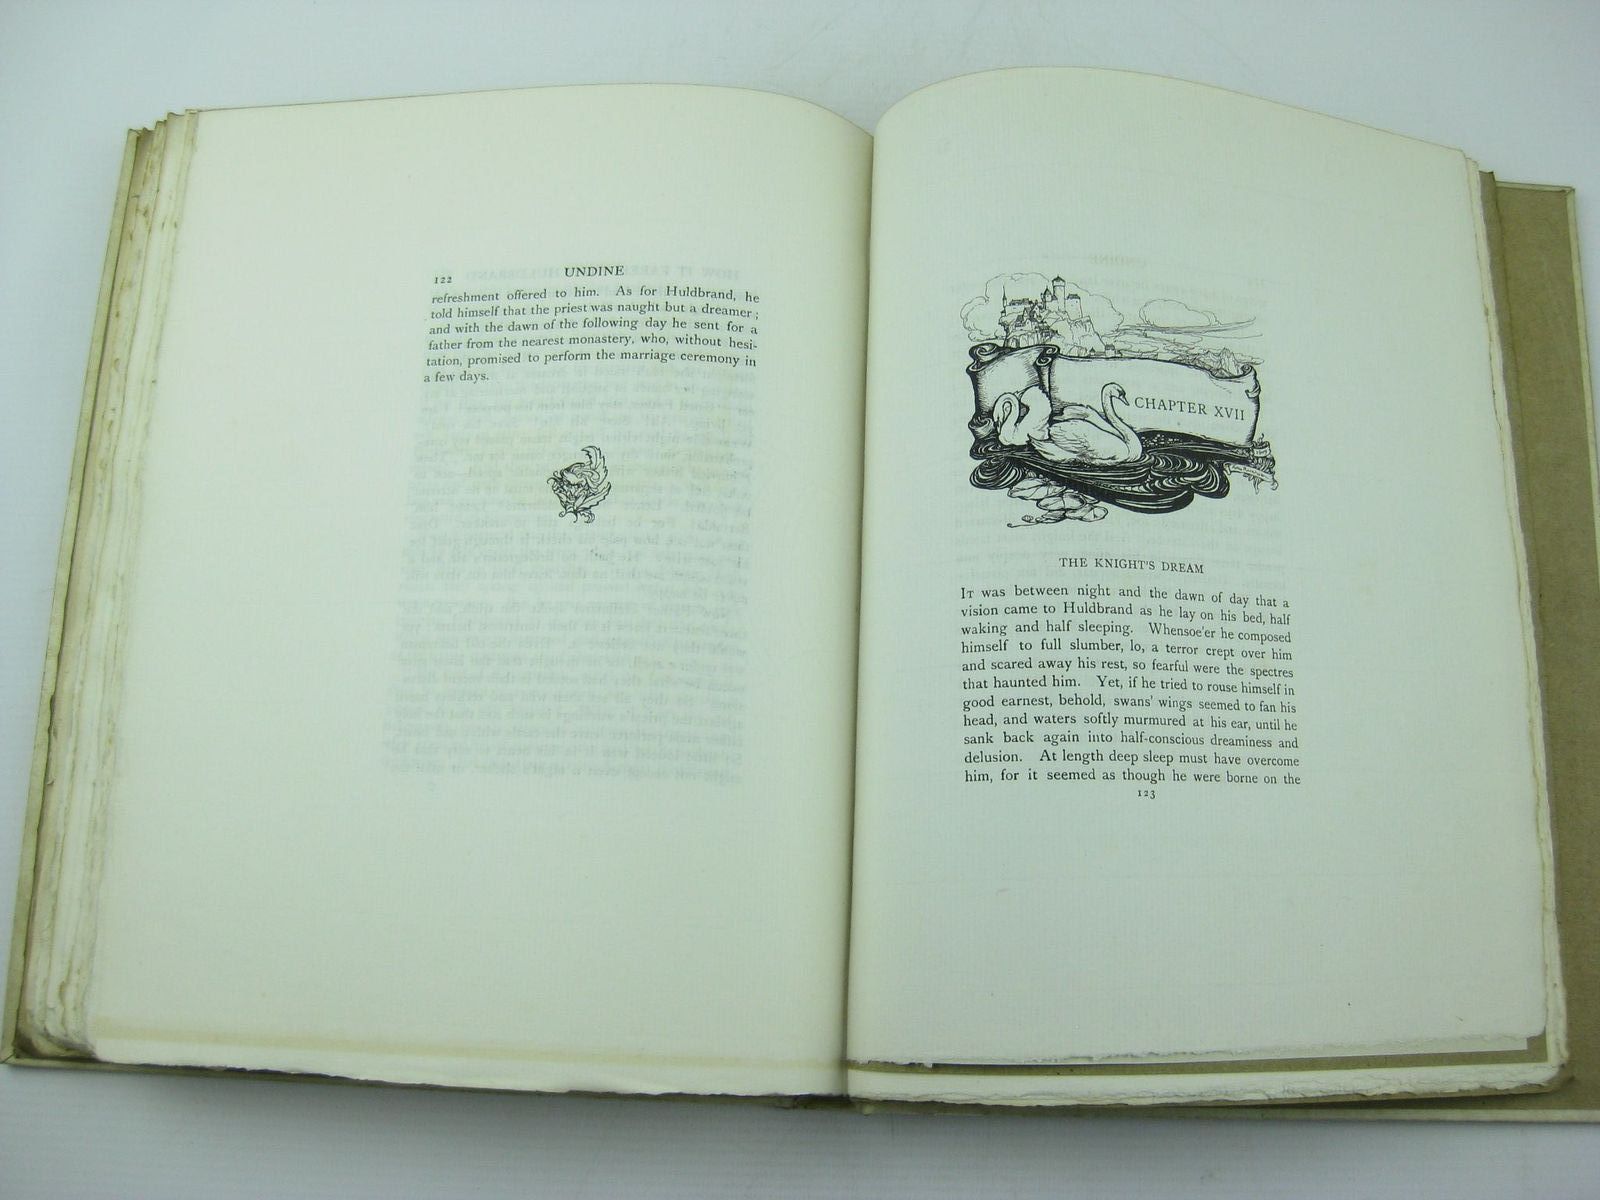 Photo of UNDINE written by De La Motte Fouque, Friedrich illustrated by Rackham, Arthur published by William Heinemann (STOCK CODE: 733868)  for sale by Stella & Rose's Books